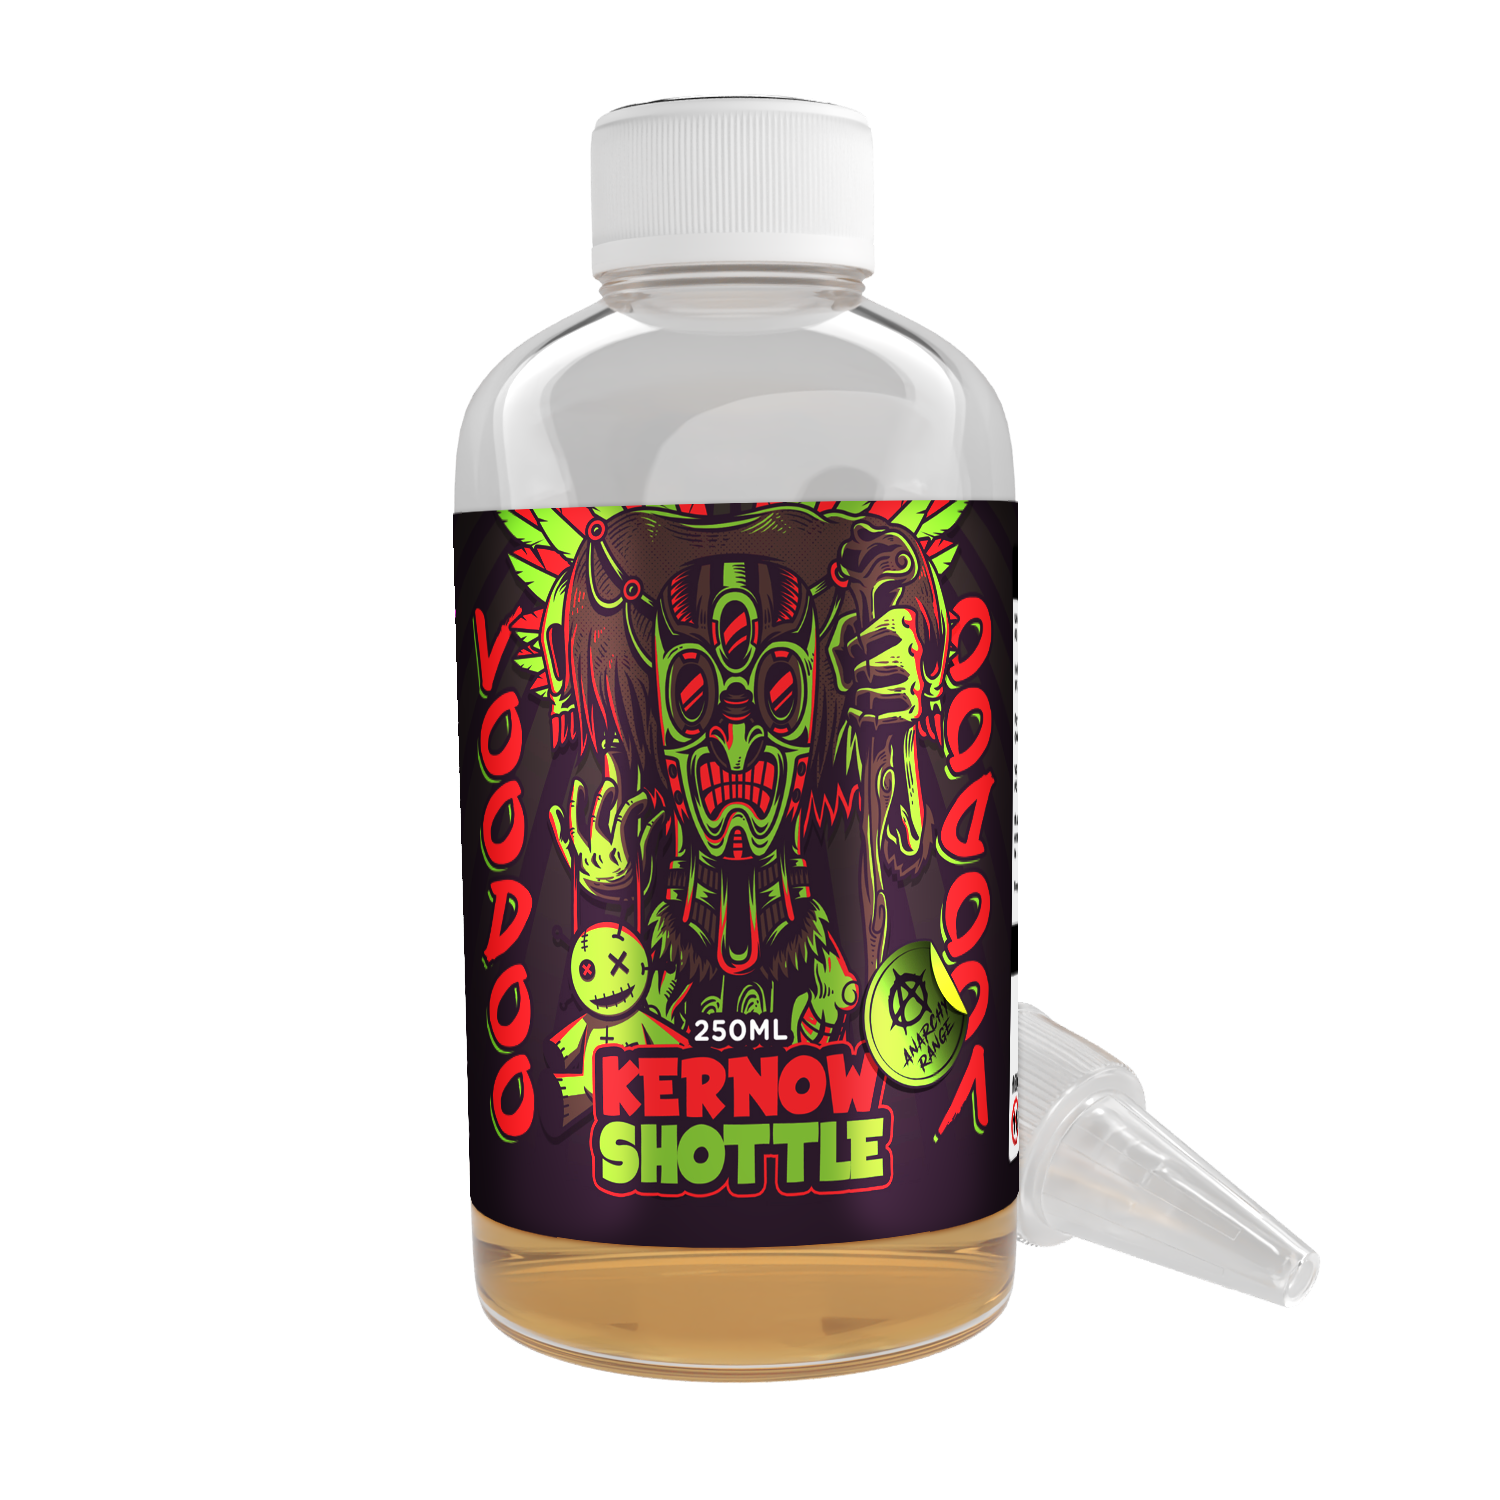 Voodoo Shottle Flavour Shot by Kernow - 250ml